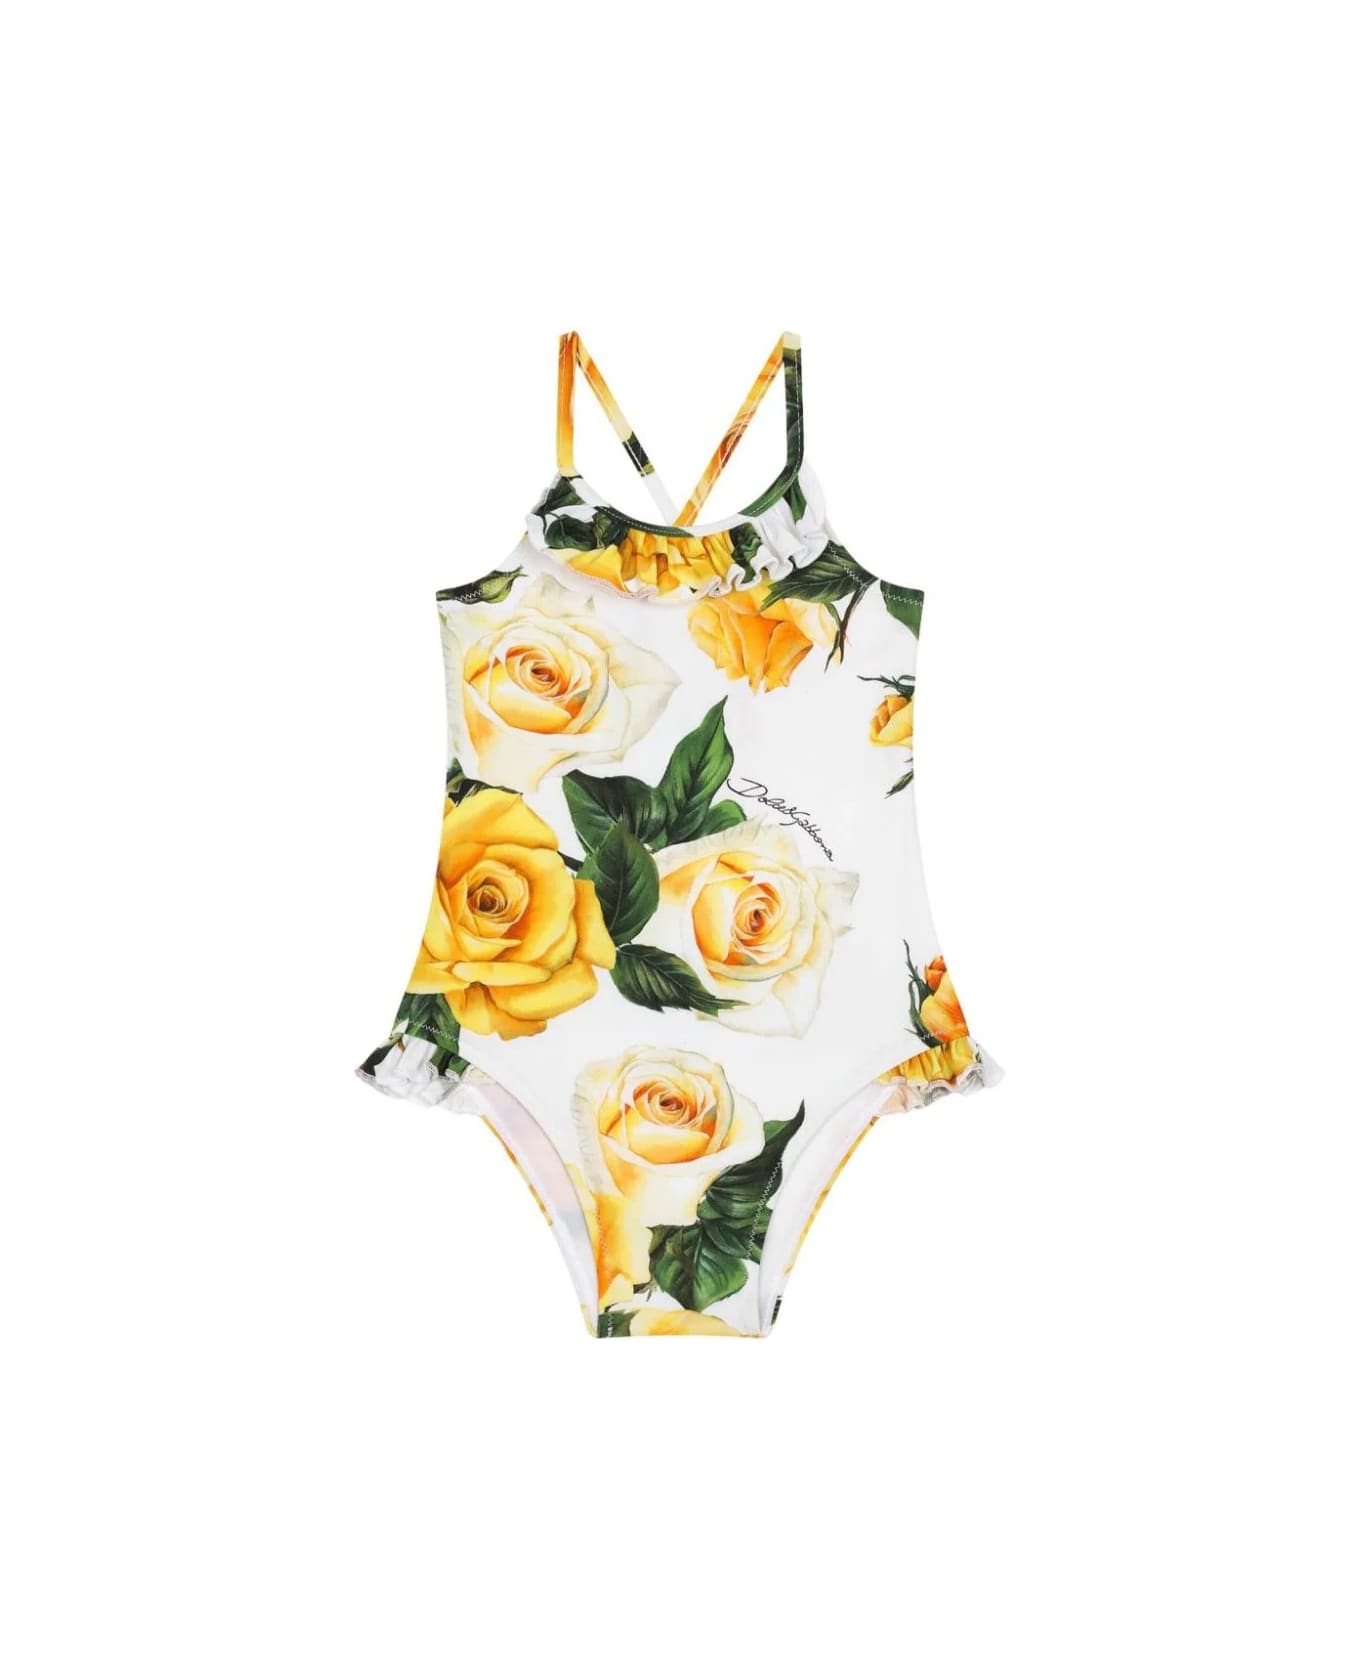 Dolce & Gabbana White One-piece Swimwear With Yellow Rose Print - Yellow 水着